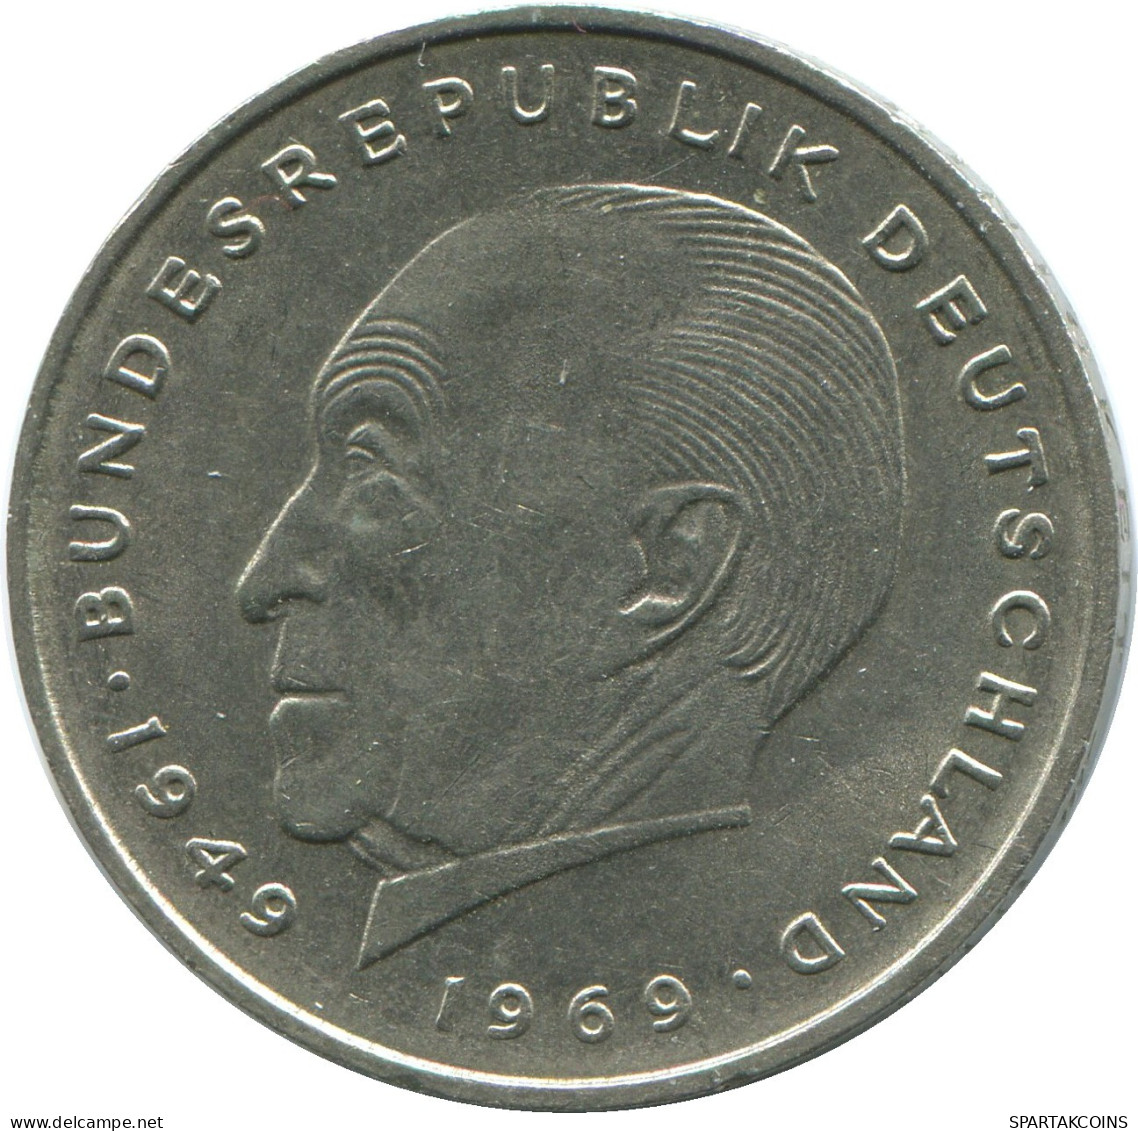 2 DM 1973 F WEST & UNIFIED GERMANY Coin #DE10386.5.U.A - 2 Mark